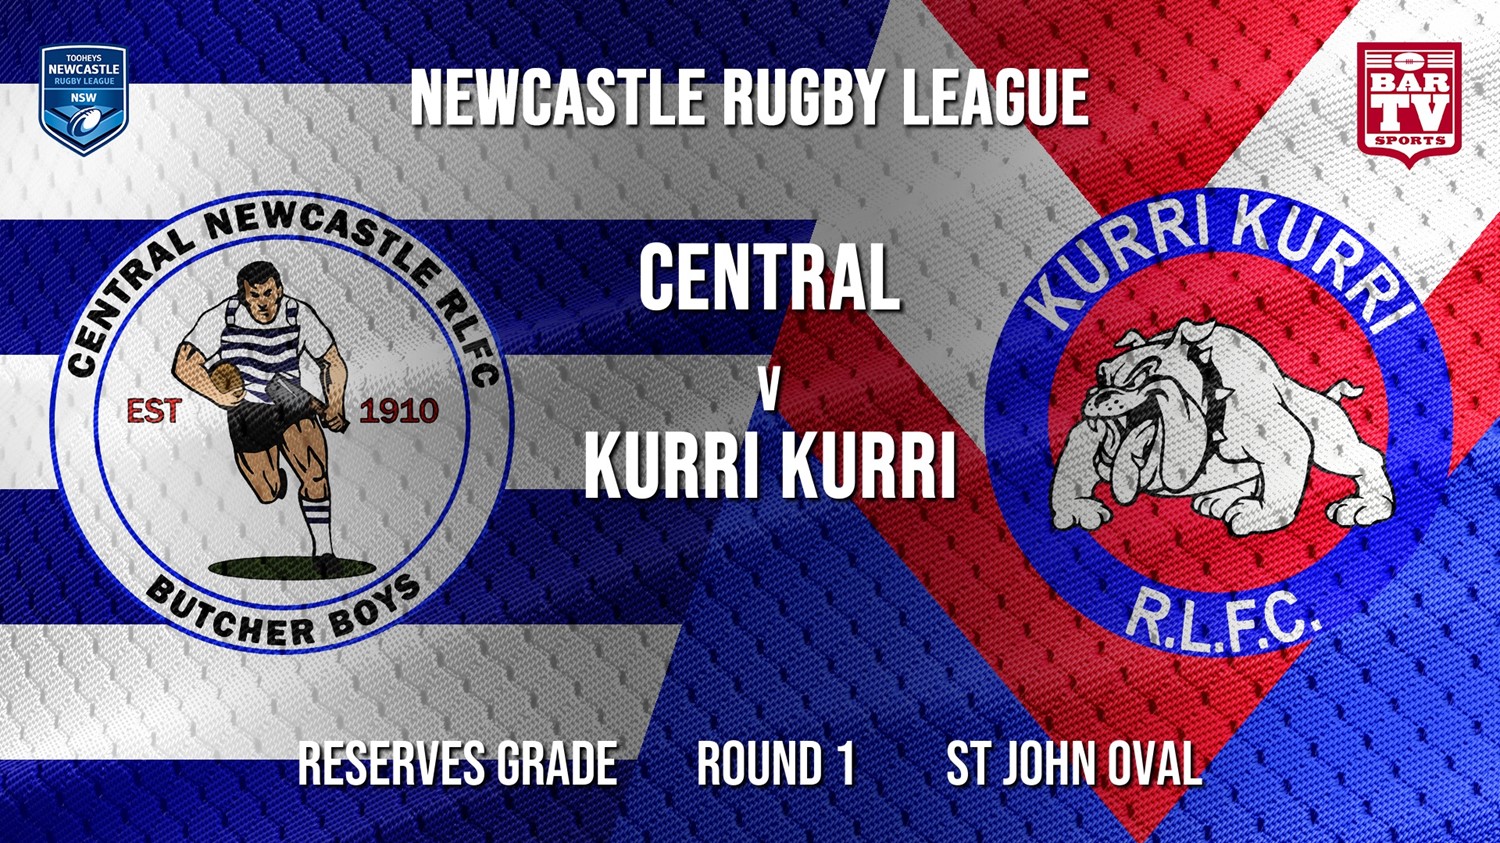 Newcastle Rugby League Round 1  - Reserves Grade - Central Newcastle v Kurri Kurri Bulldogs Minigame Slate Image